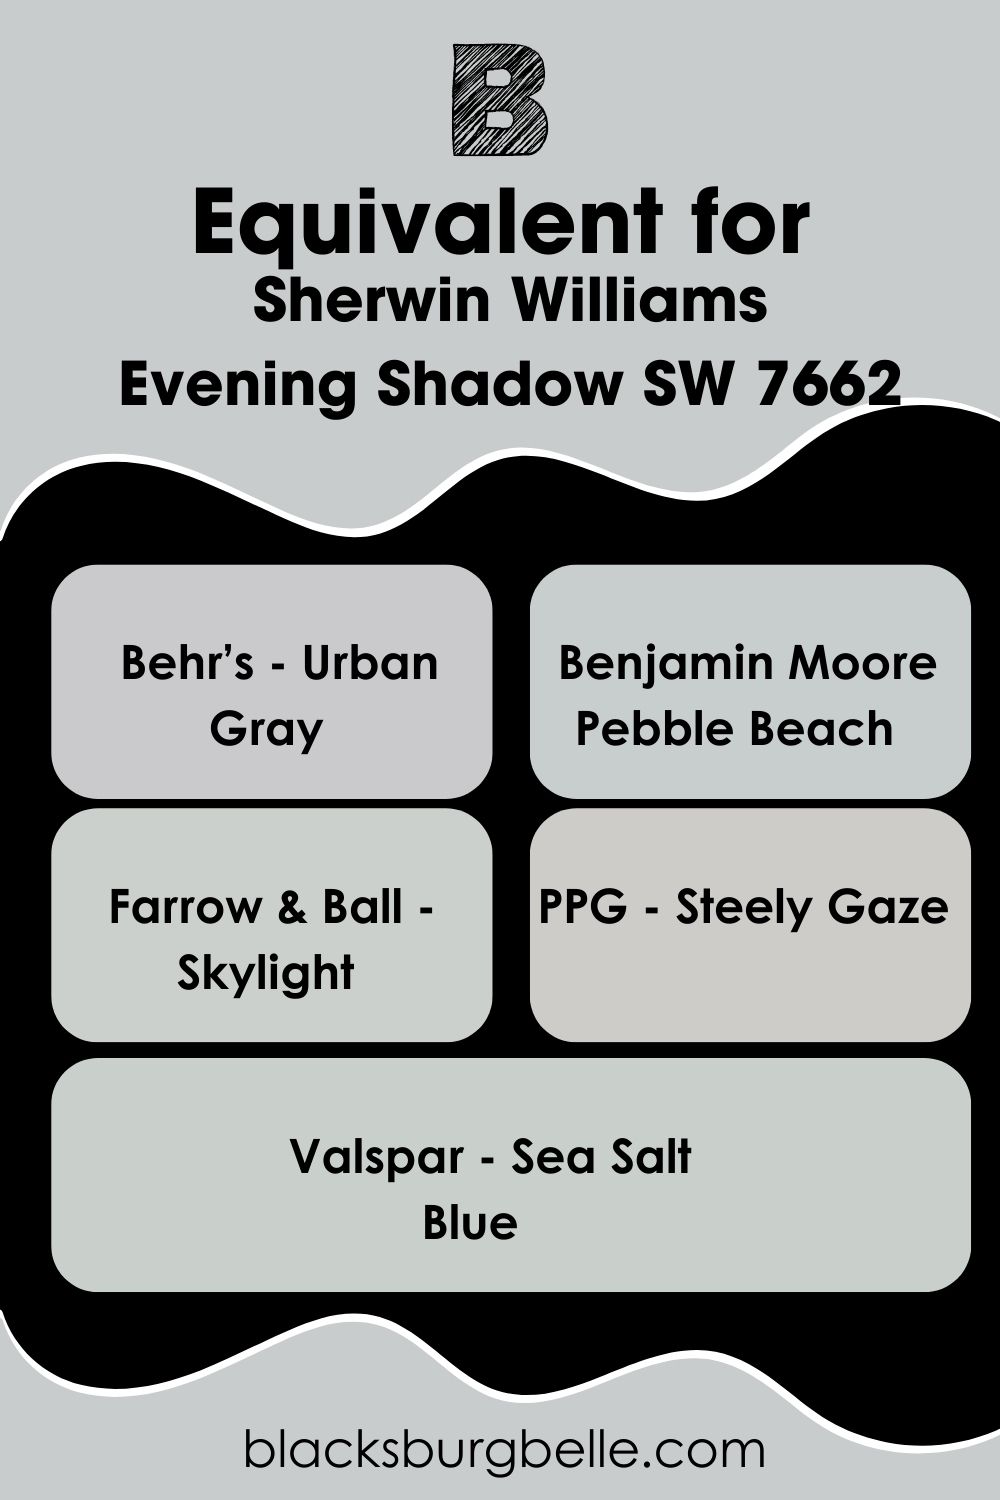 Evening Shadow SW 7662 (14)